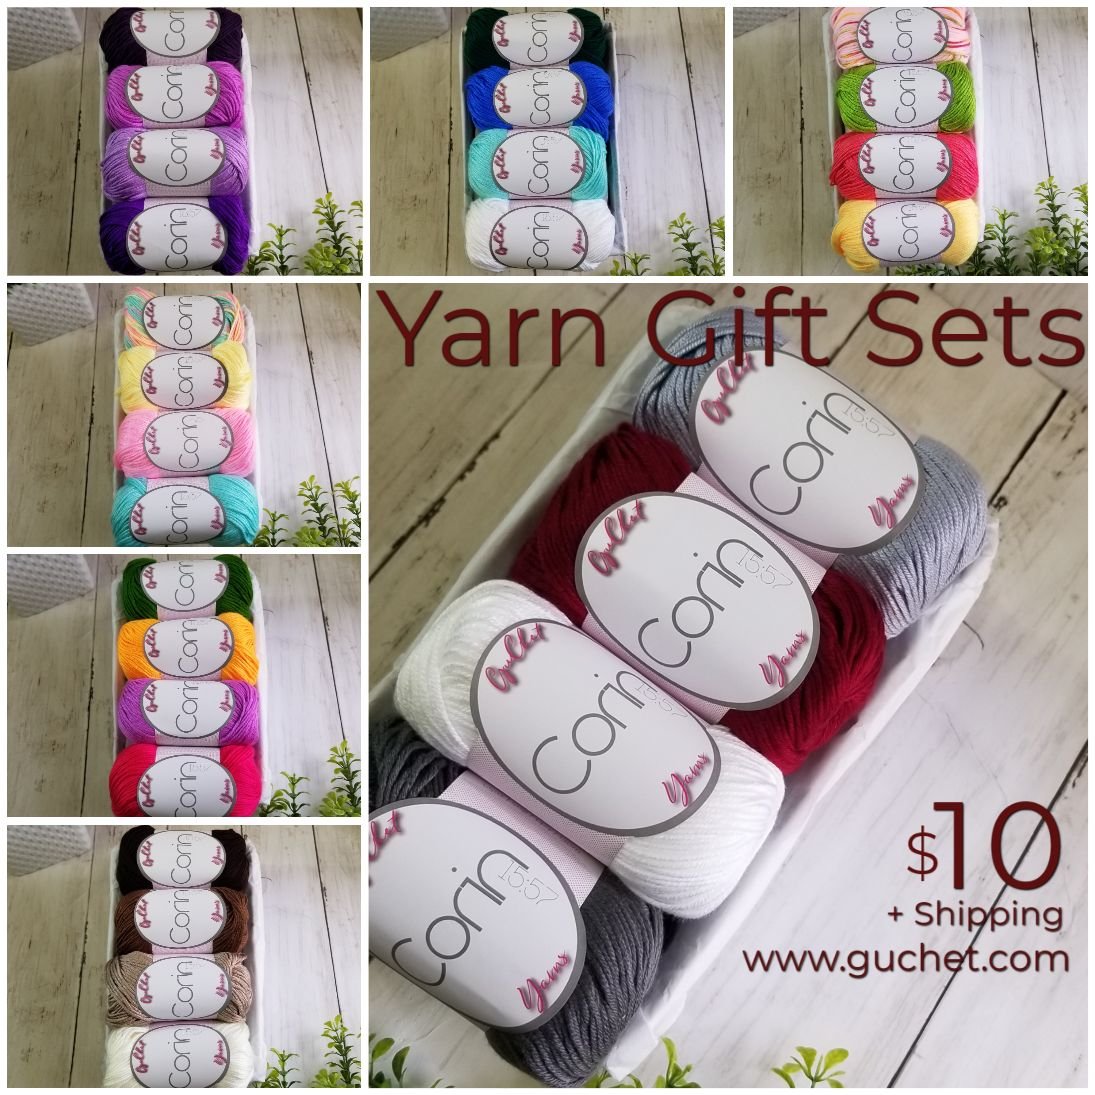 $10 Yarn Gift Sets - www.guchet.com 1.jpg